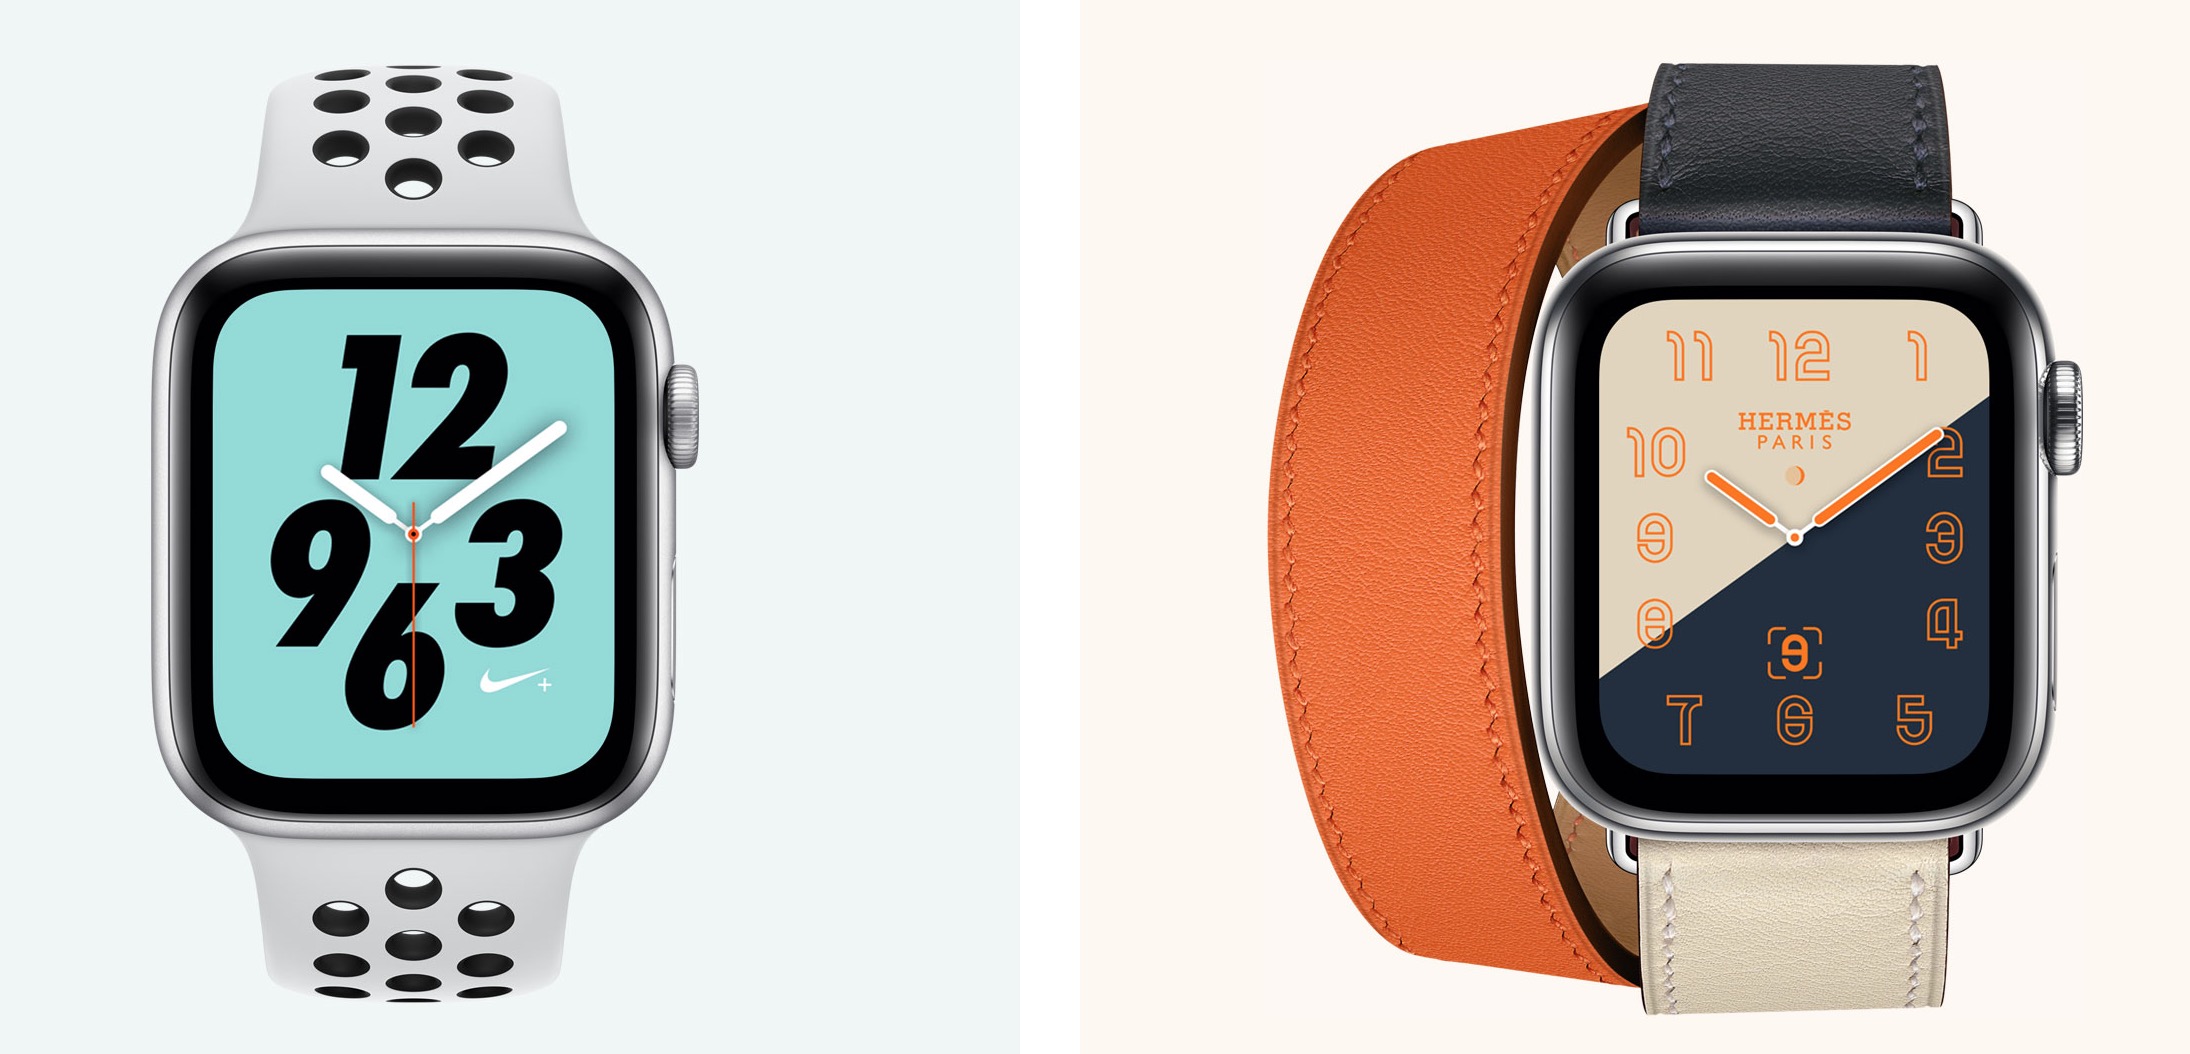 differenza tra apple watch e apple watch nike